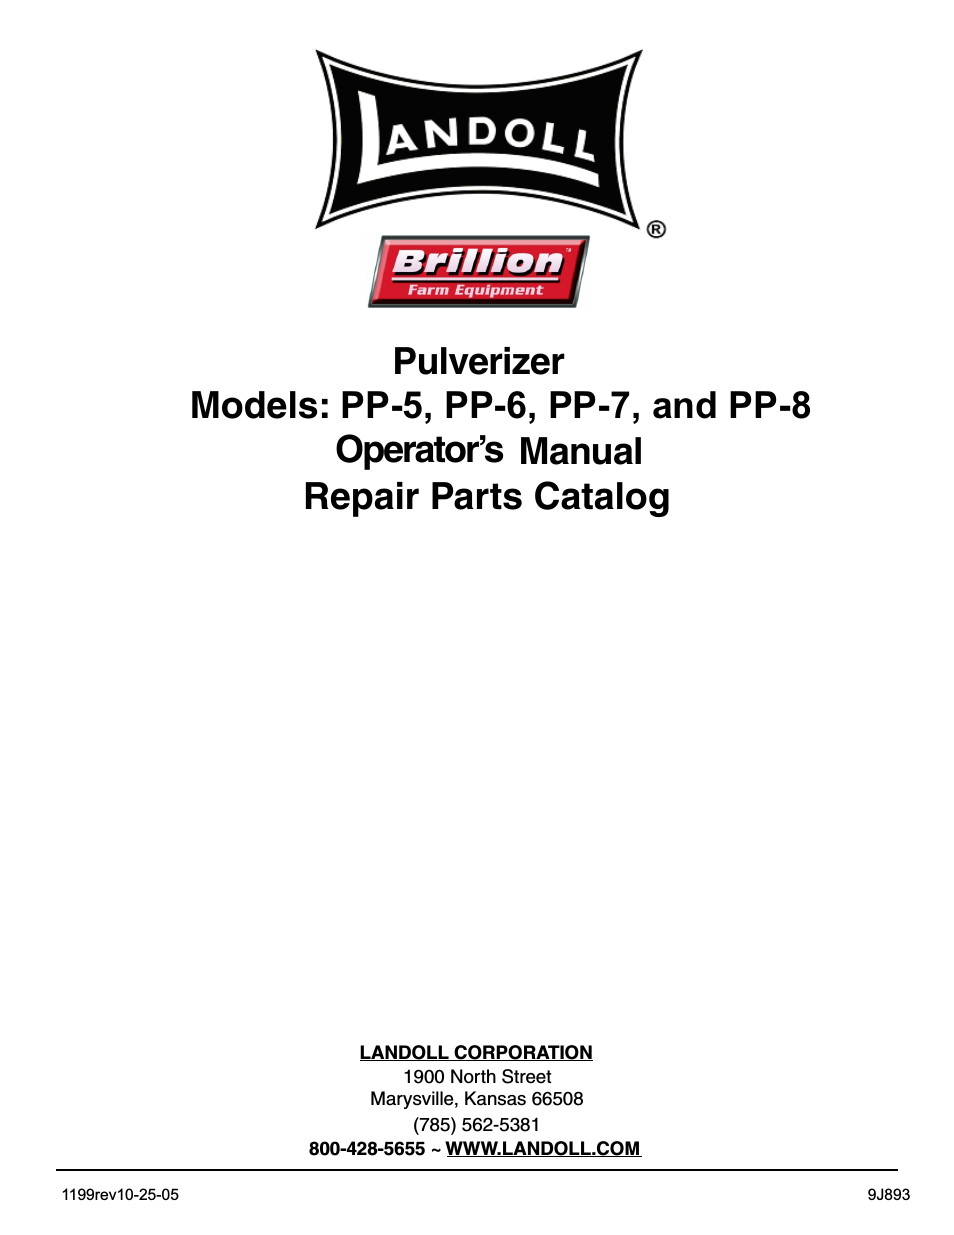 PP-6 Pulverizer